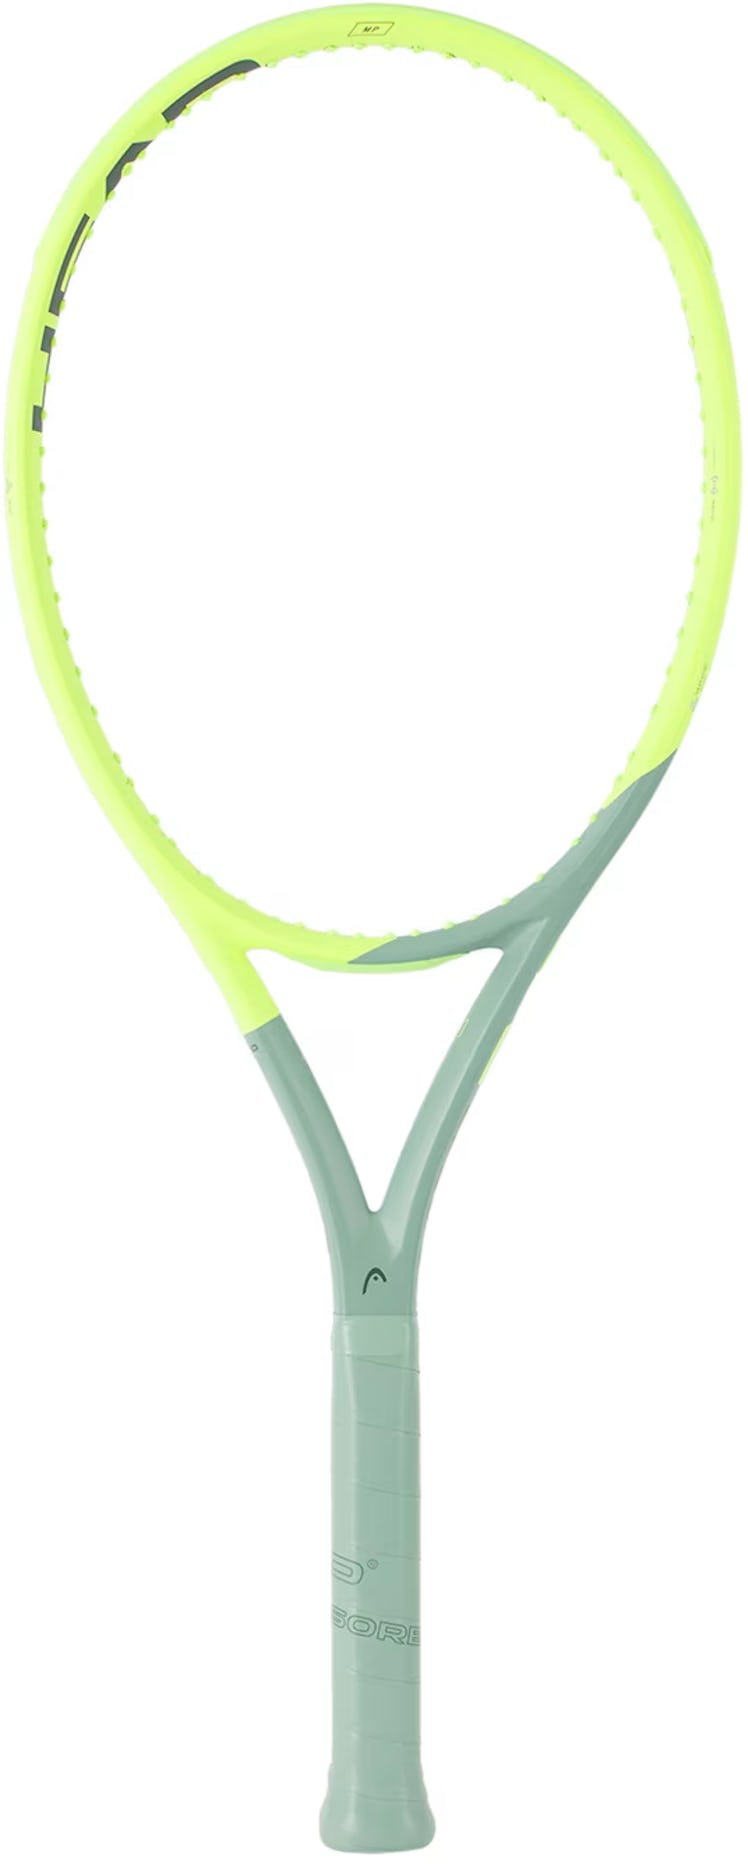 Blue & Green Extreme MP Tennis Racket